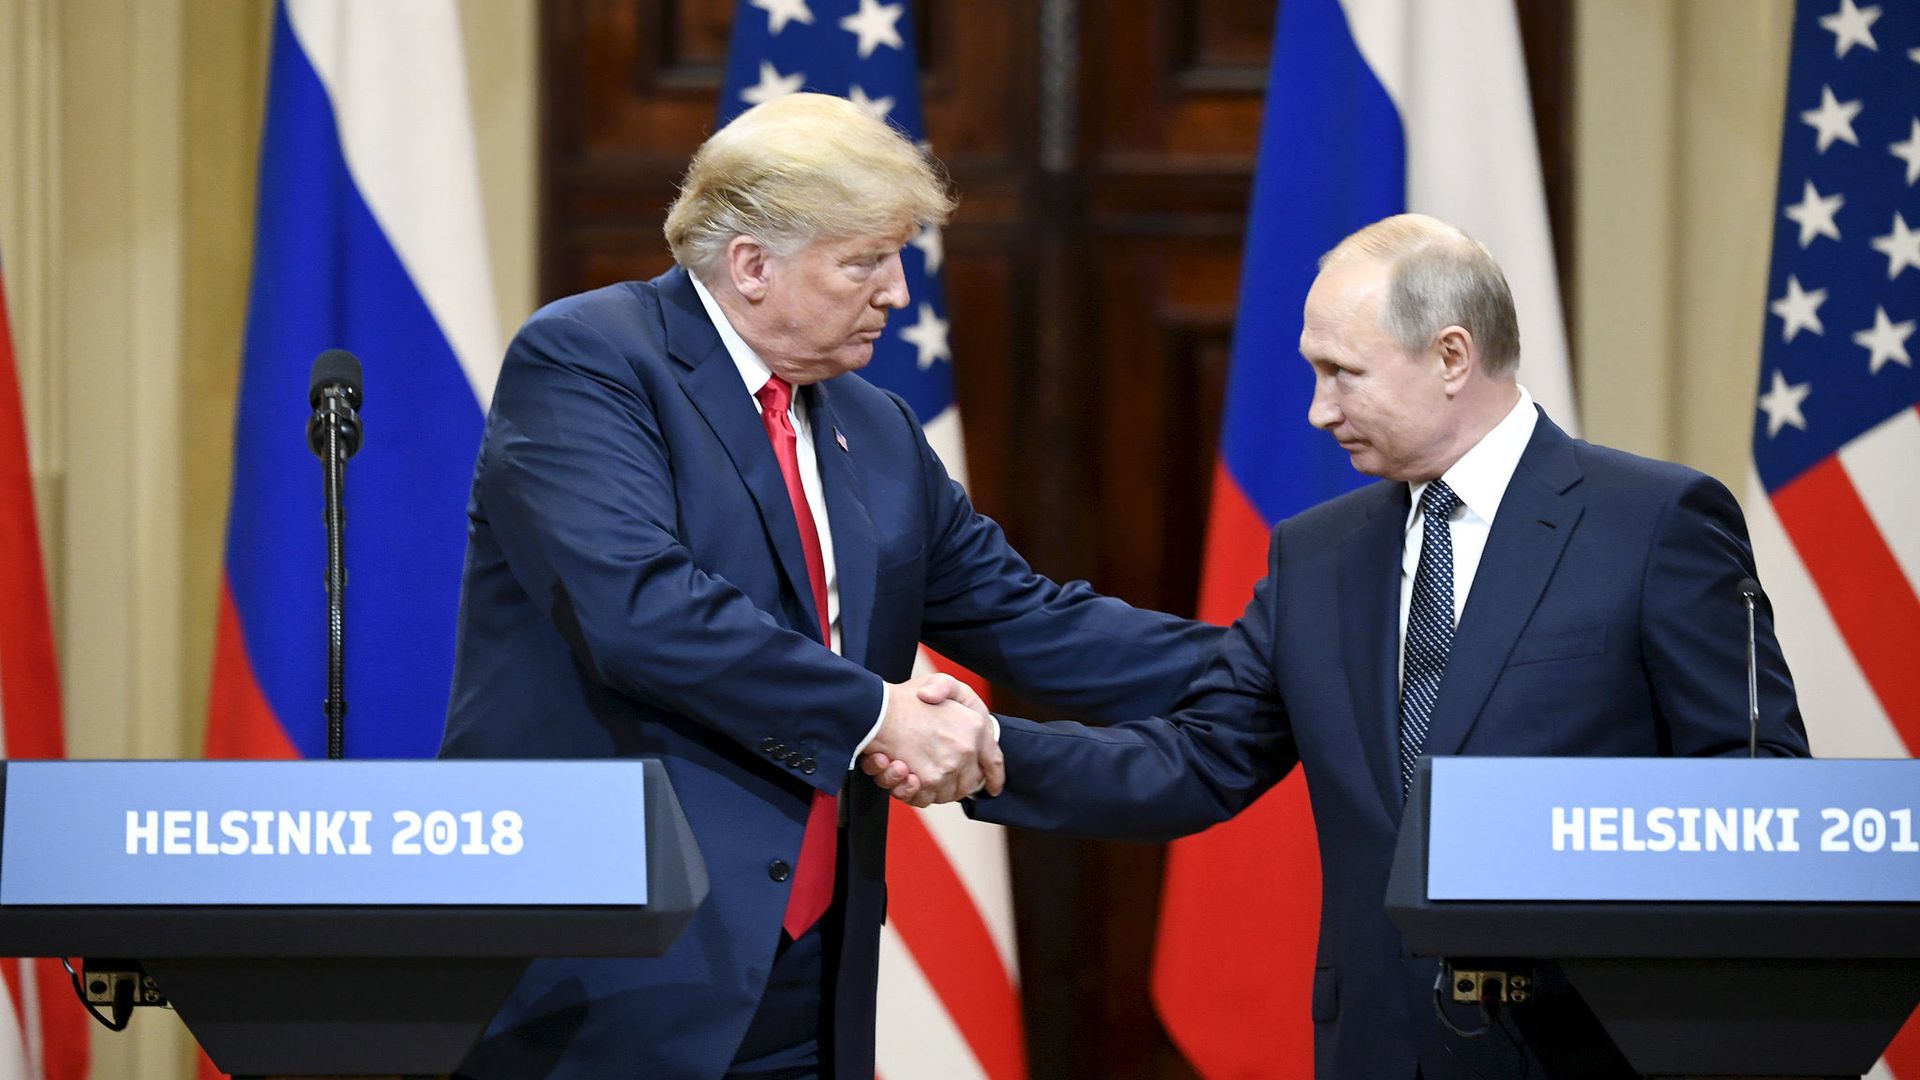 President Trump and Russian President Vladimir Putin. Photo: Xinhua/Lehtikuva/Jussi Nukari via Getty Images